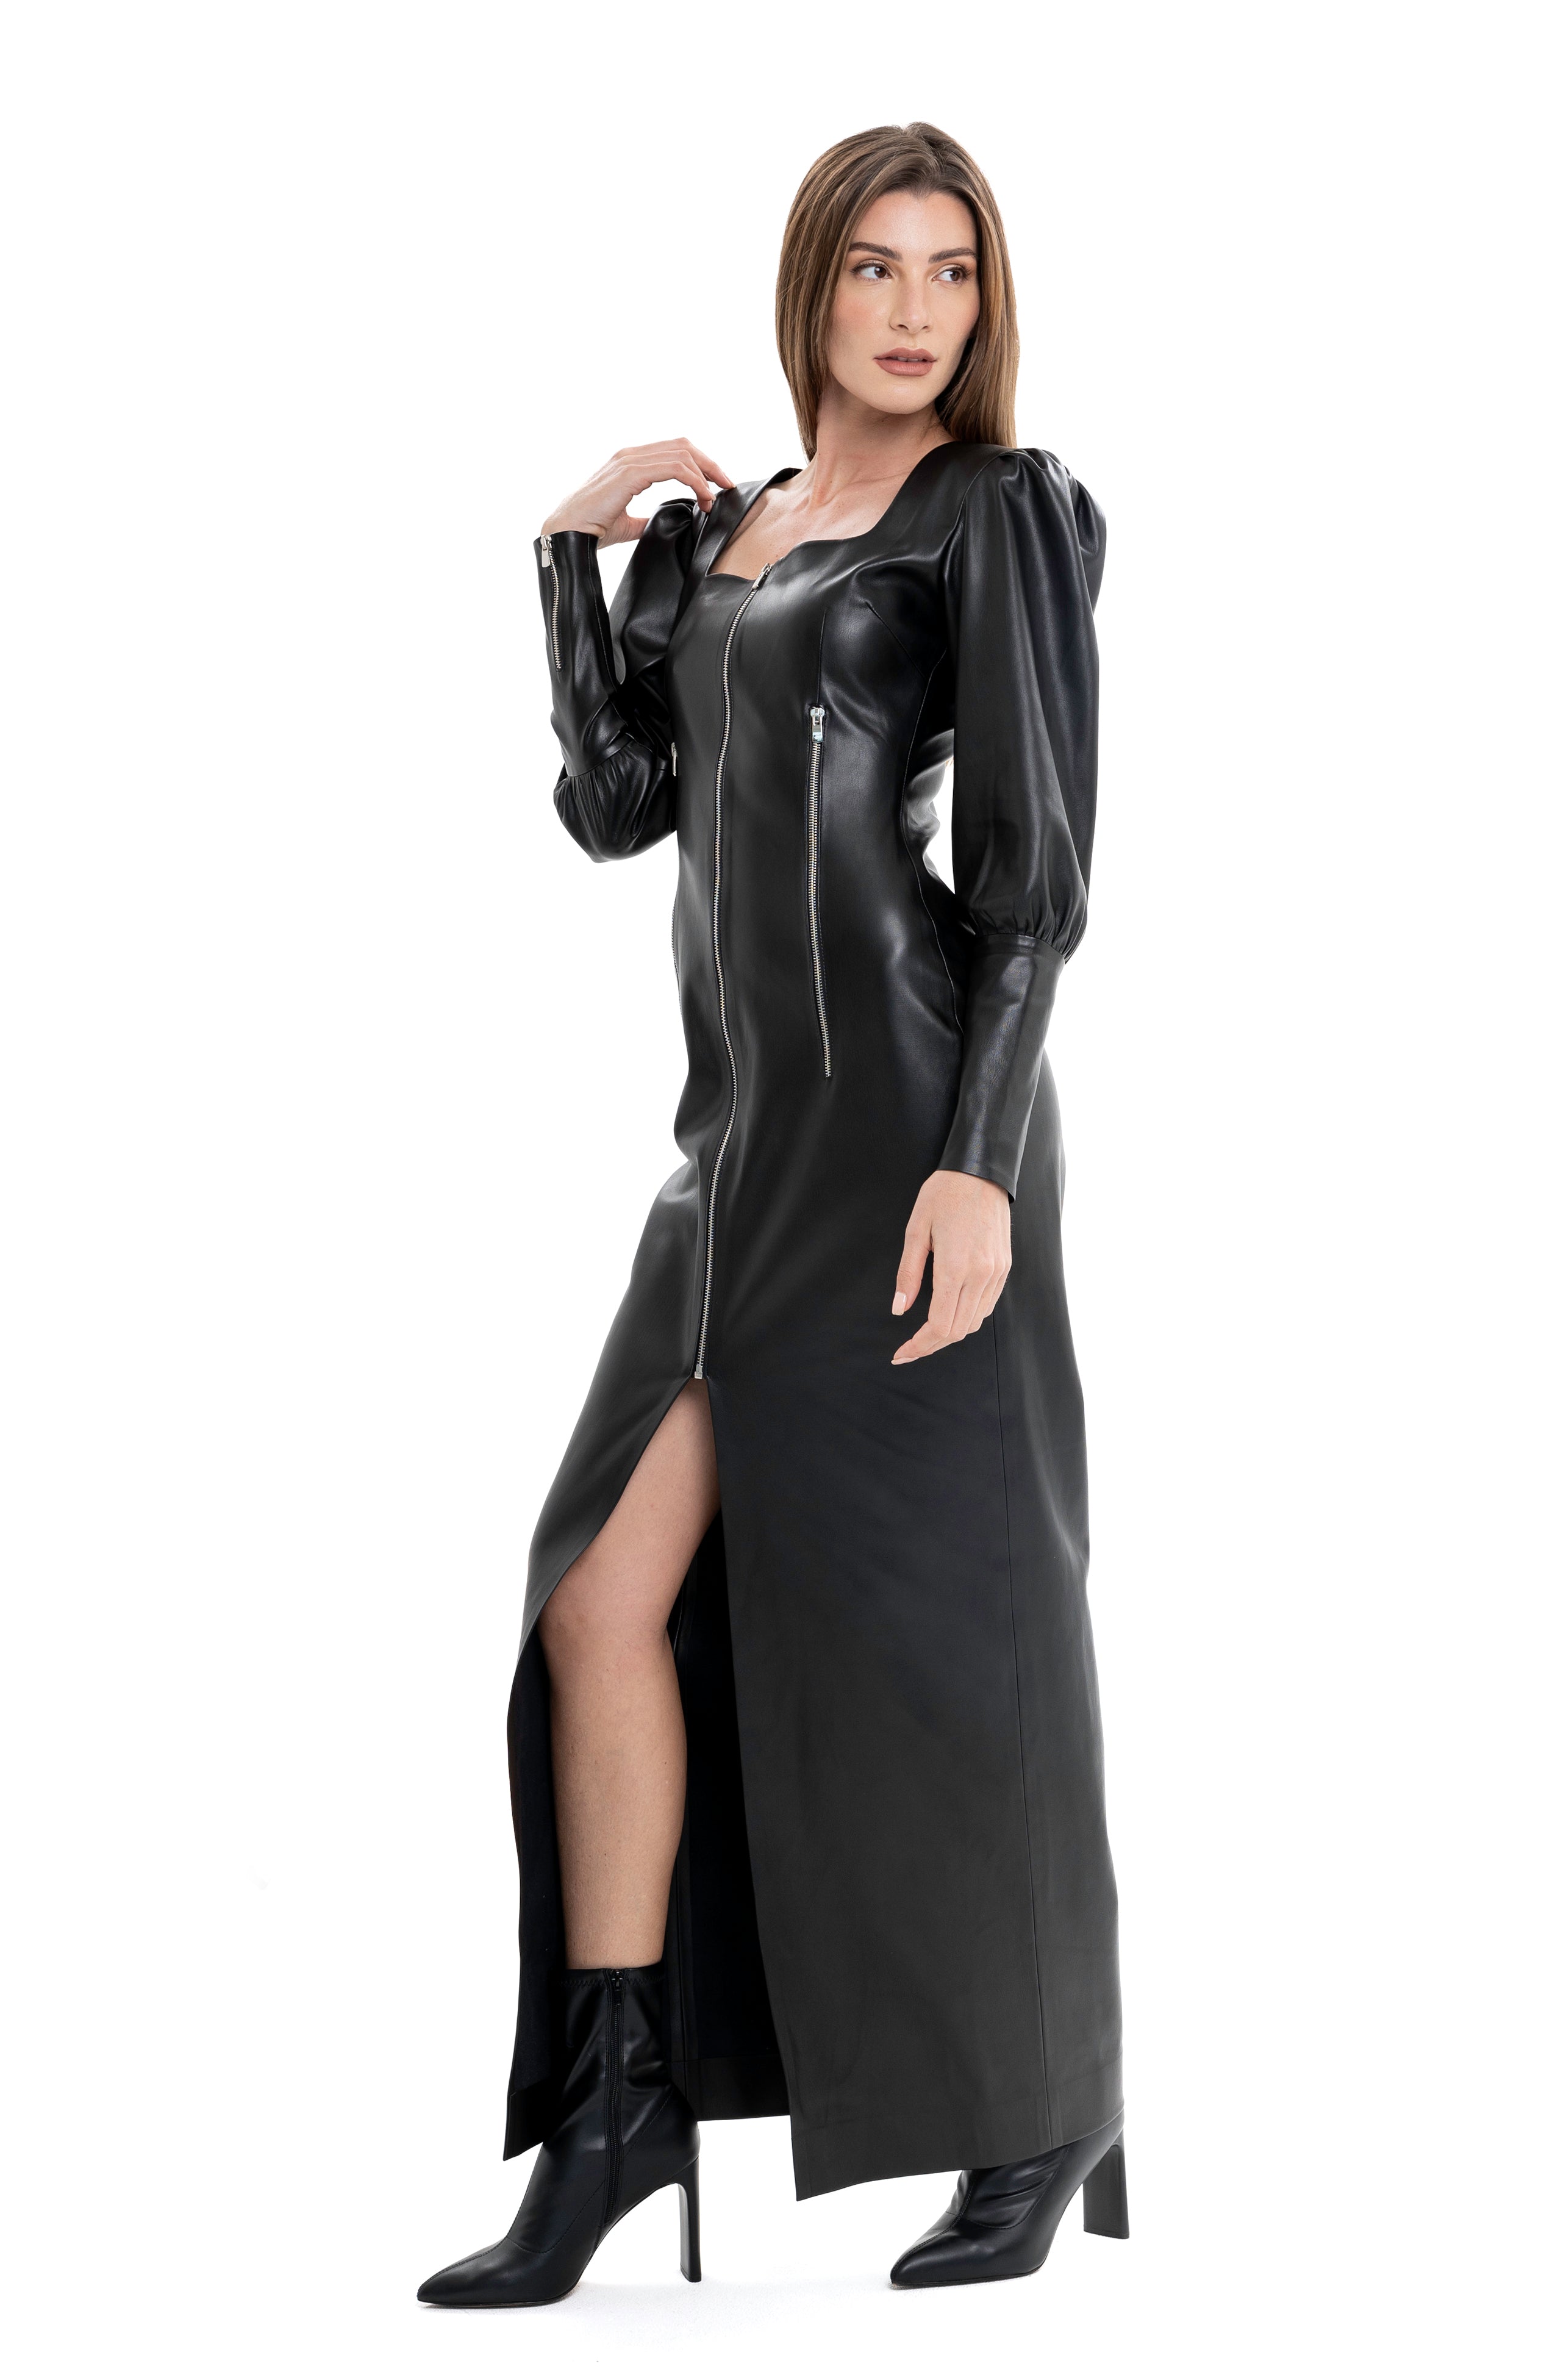 The Dramatic Vegan Leather Dress by Lili Blanc